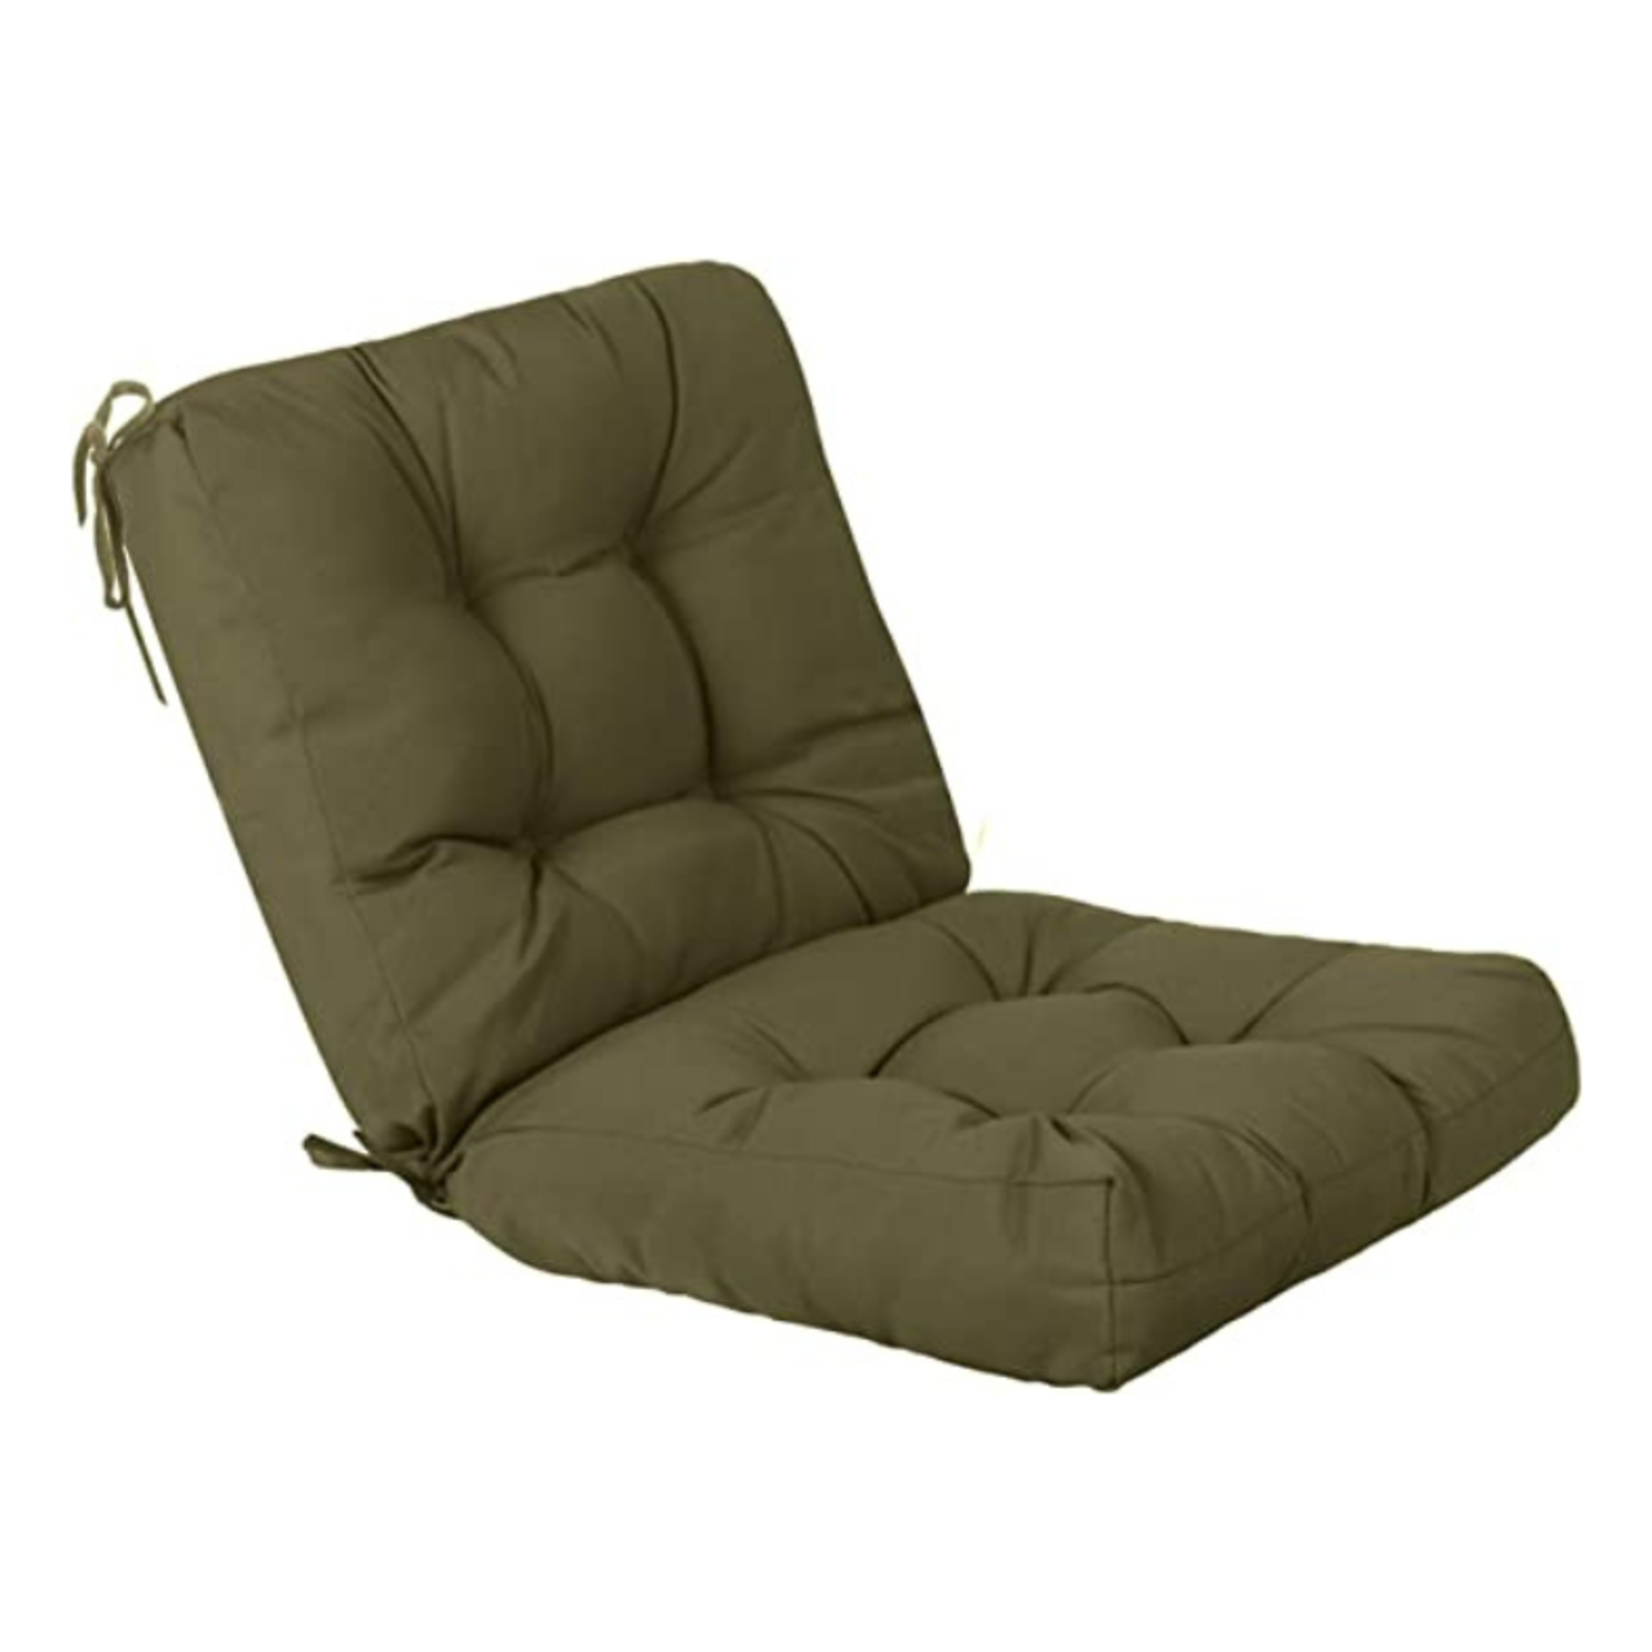 Qilloway Chair Cushion- Seat & Back- Sage Green